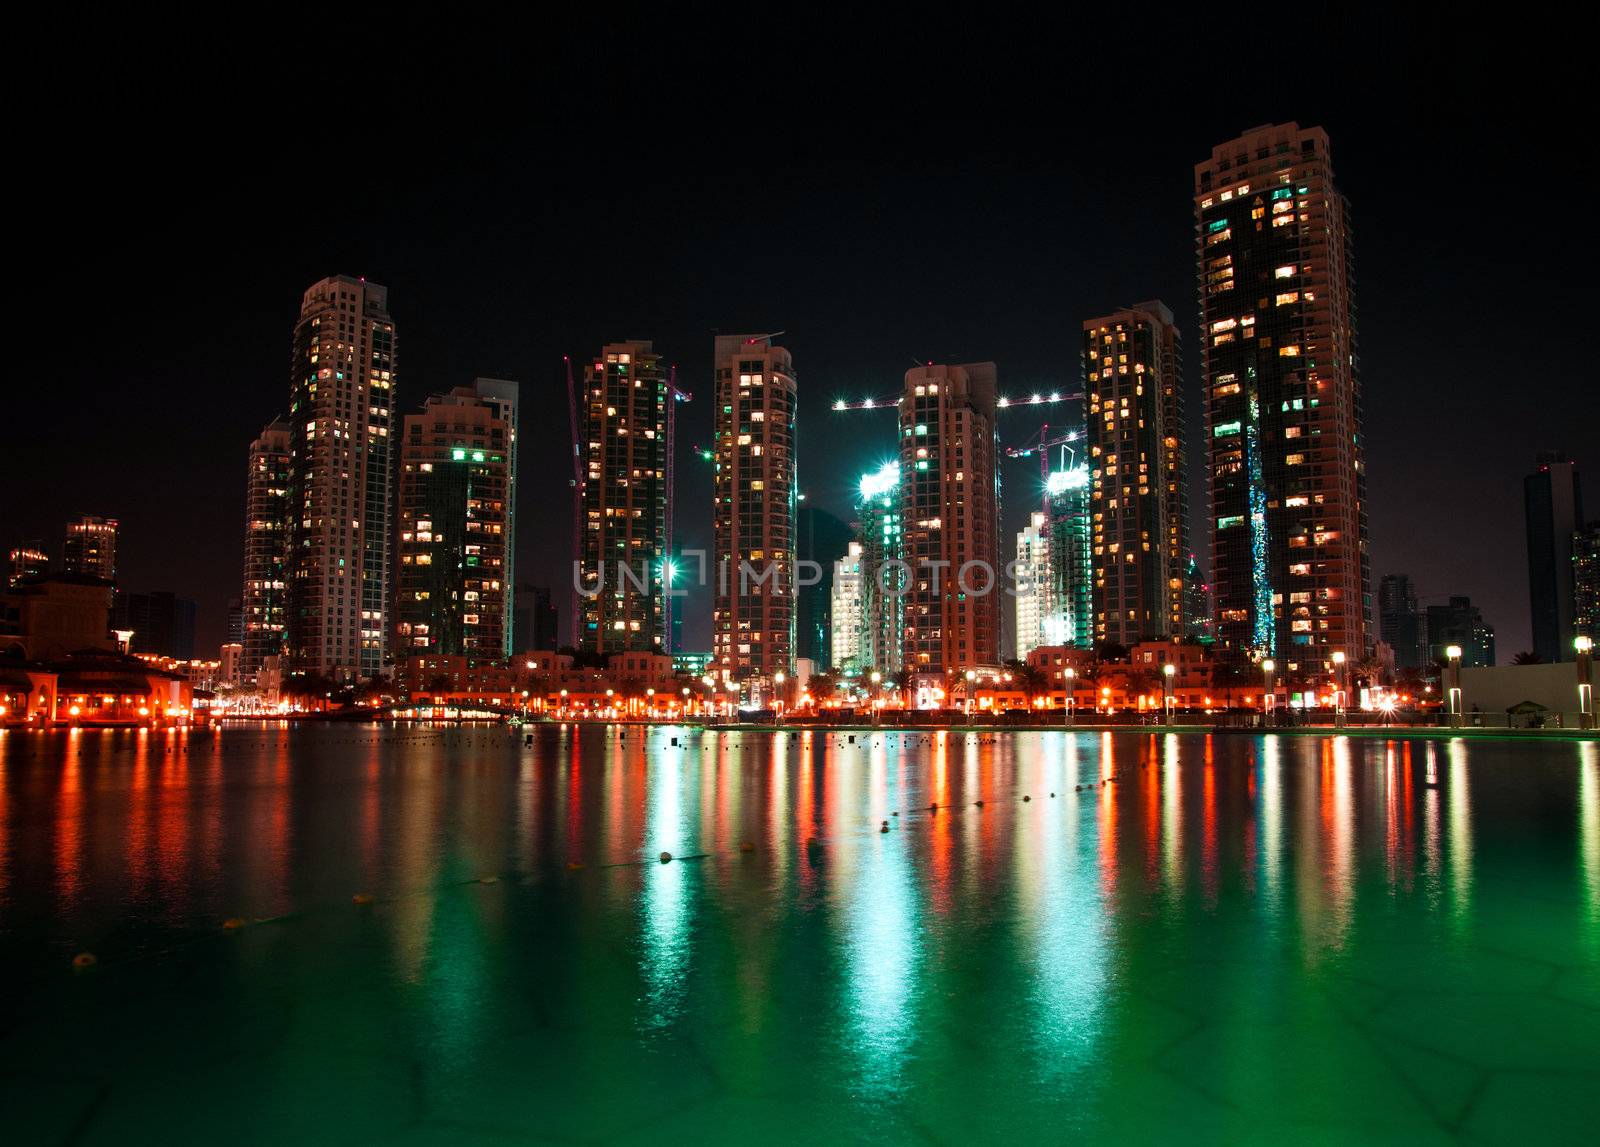 Dubai At Night by GekaSkr